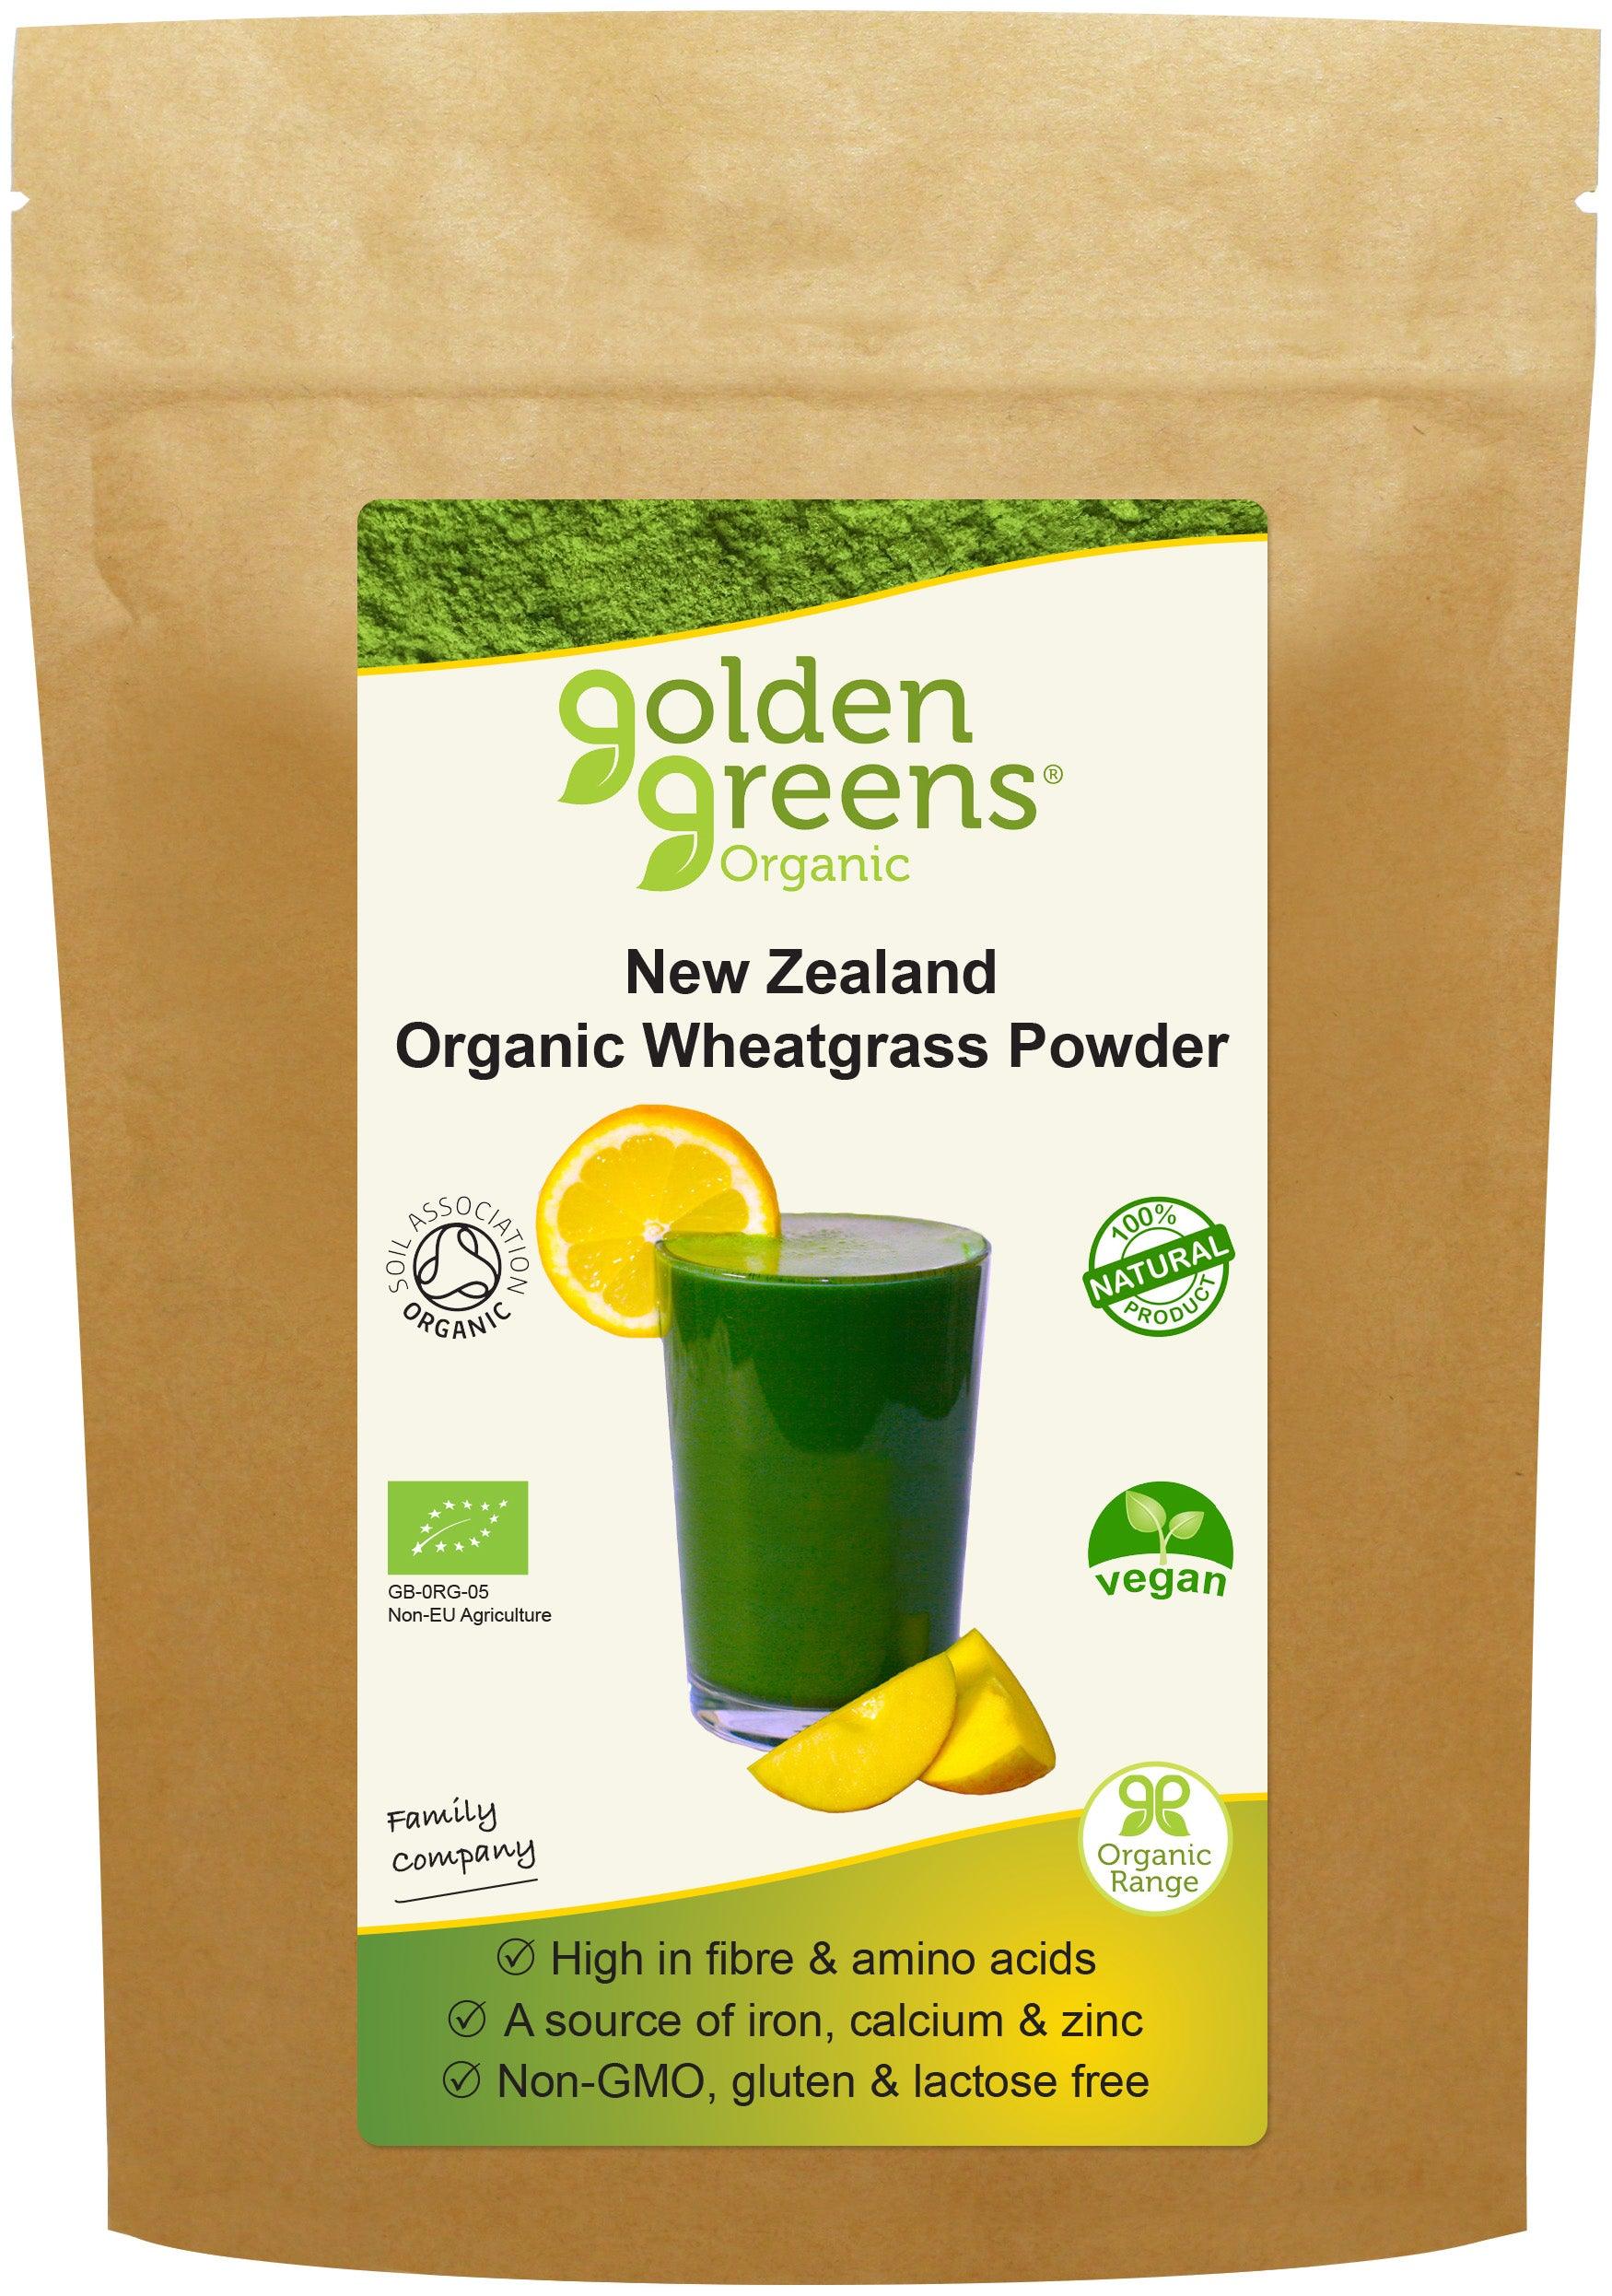 Golden Greens (Greens Organic) New Zealand Organic Wheatgrass Powder 100g - Approved Vitamins